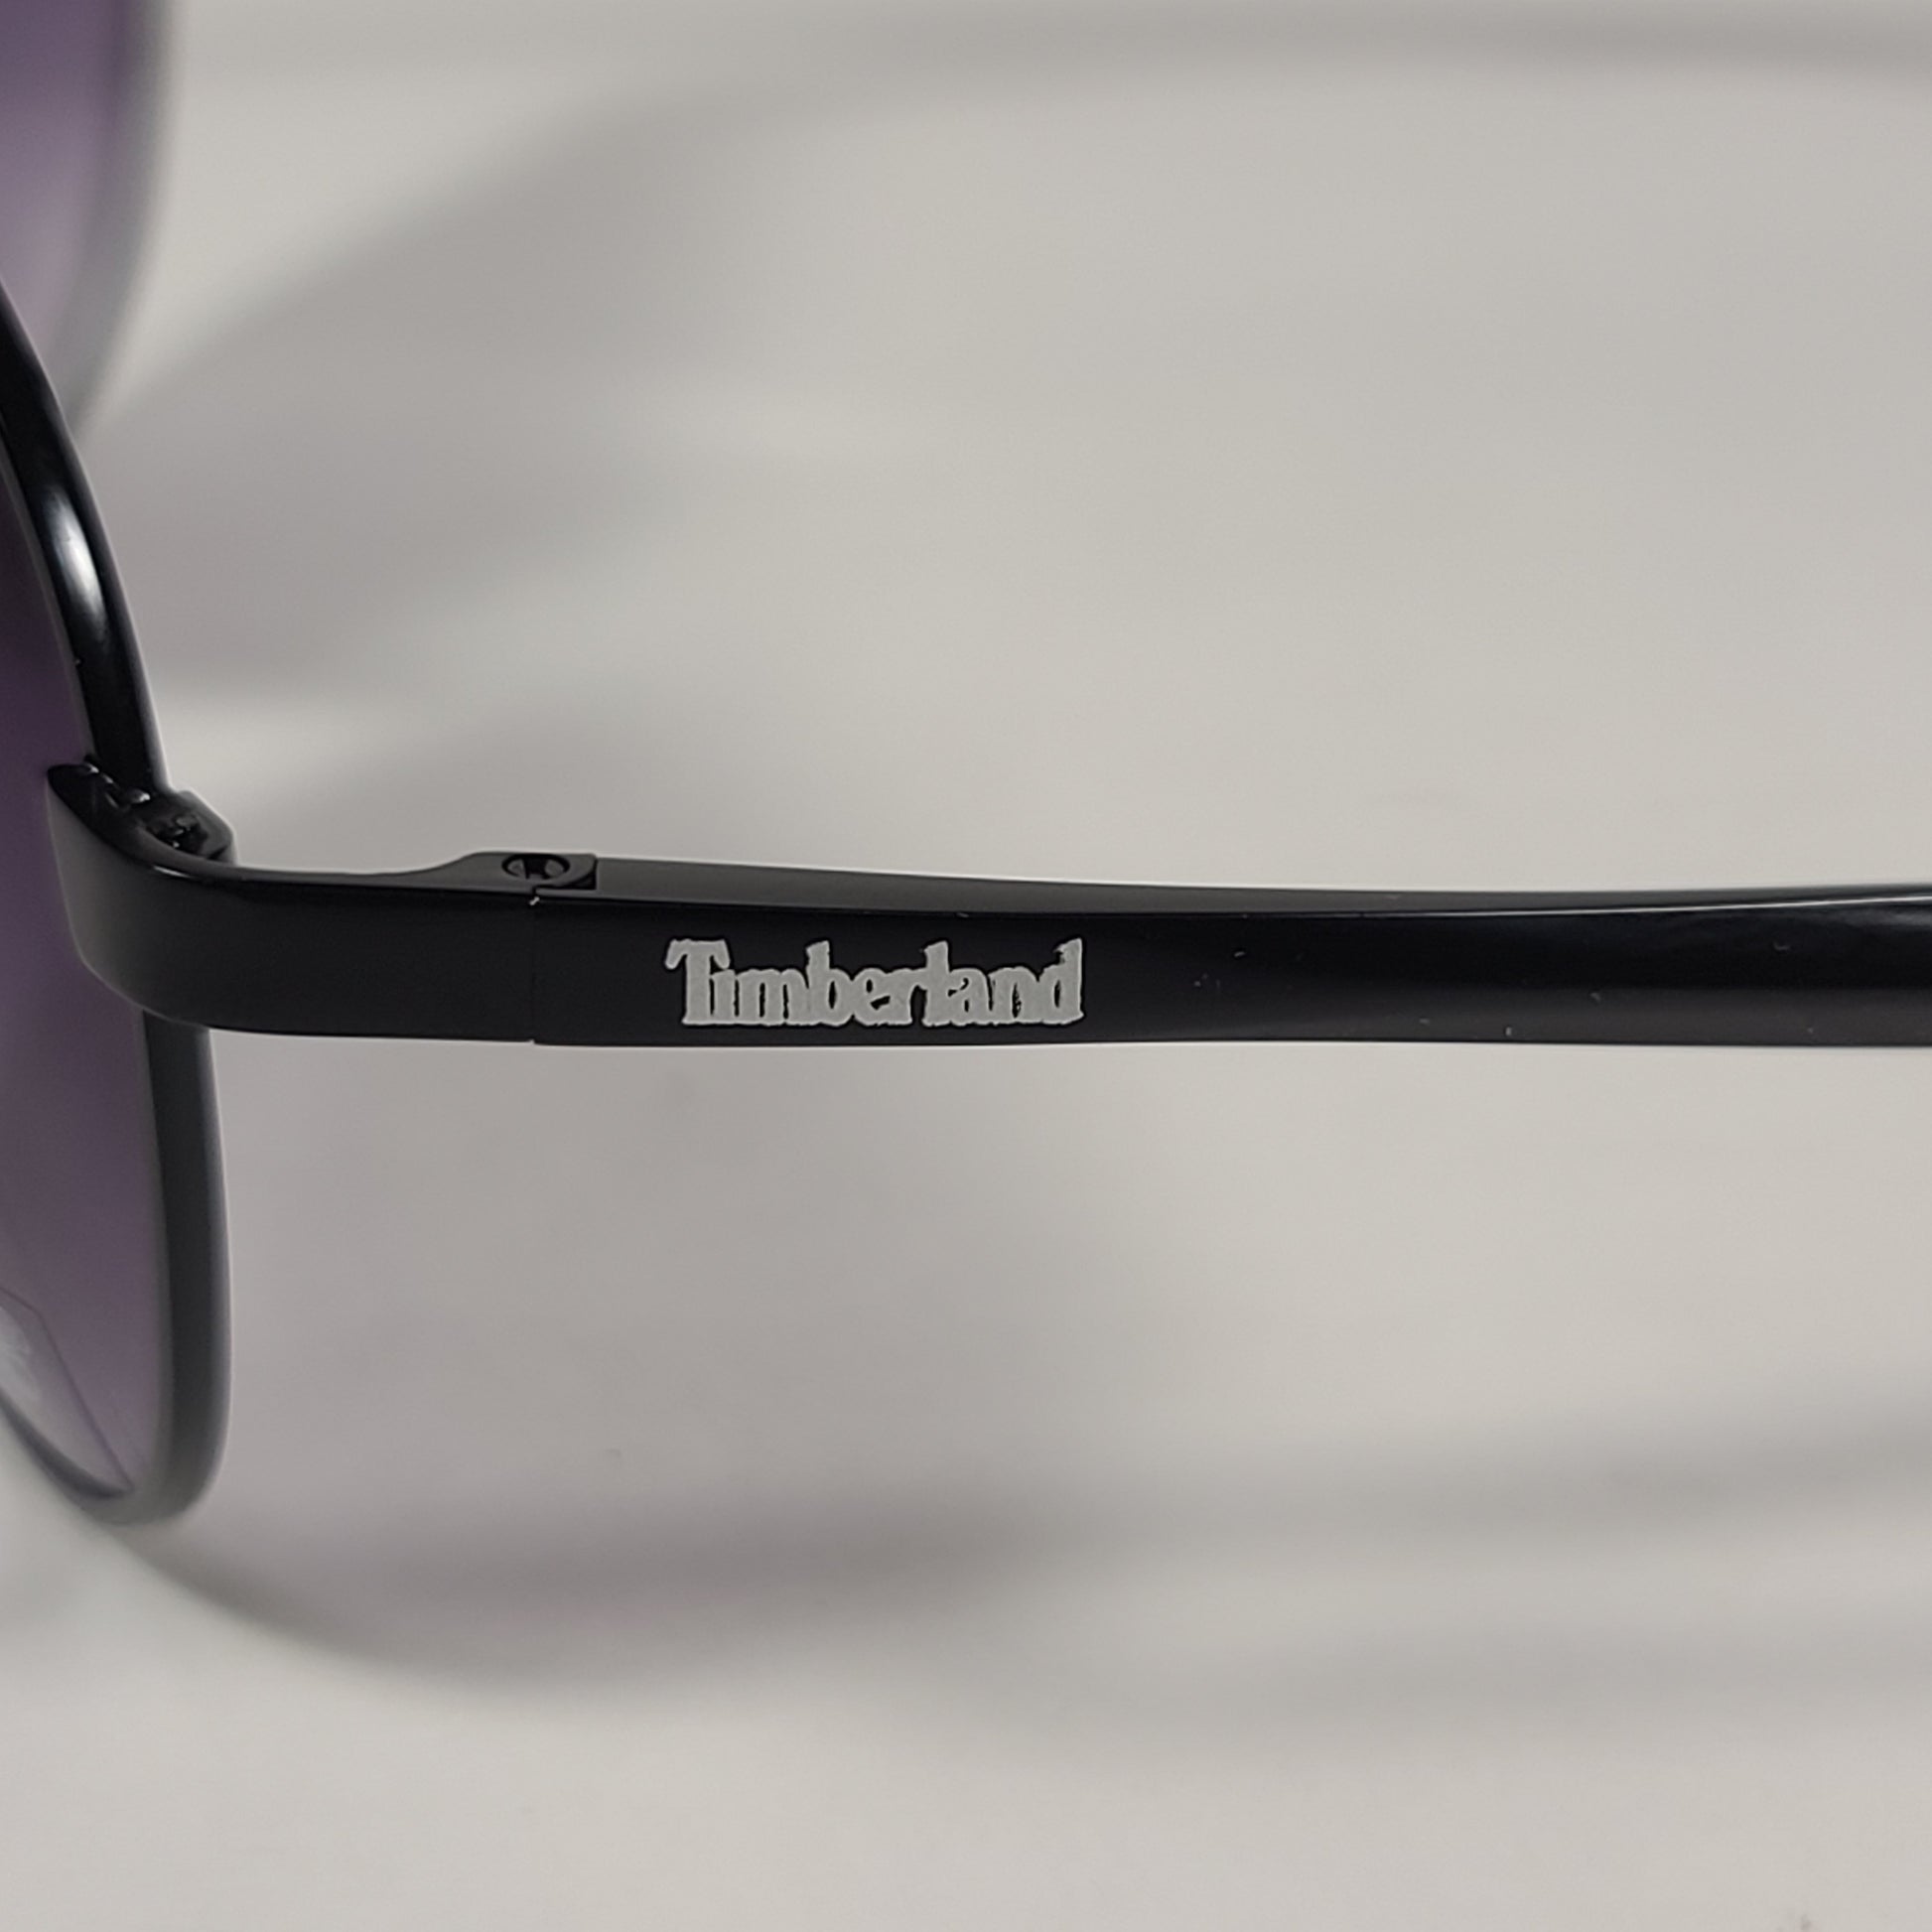 Timberland Aviator Sunglasses Shiny Black Frame Smoke Gradient Lens TB7114 02B - Sunglasses